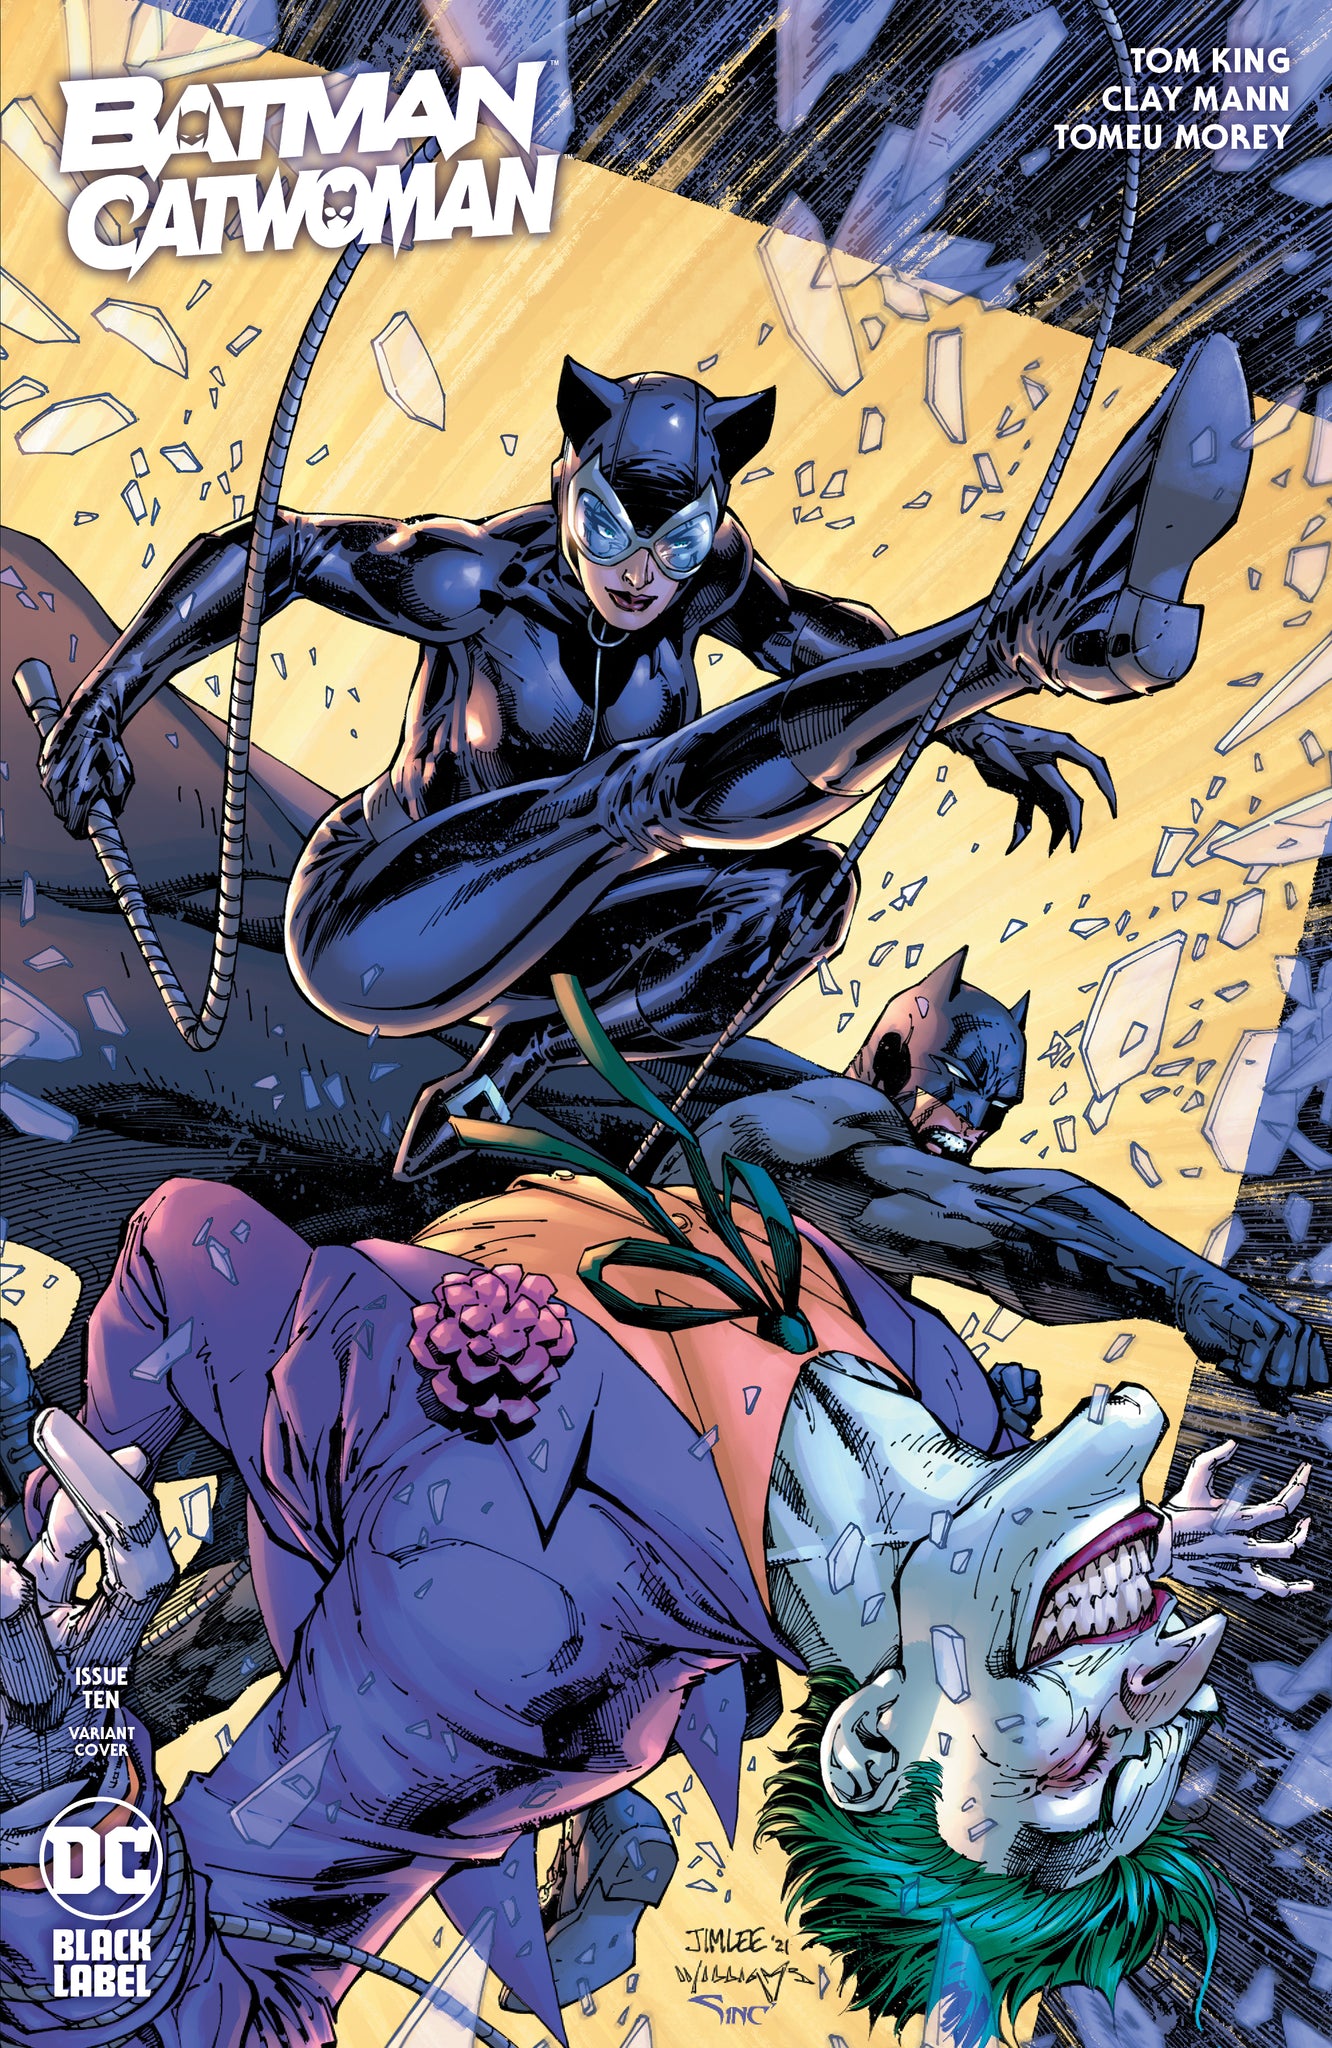 BATMAN CATWOMAN #10 (OF 12)